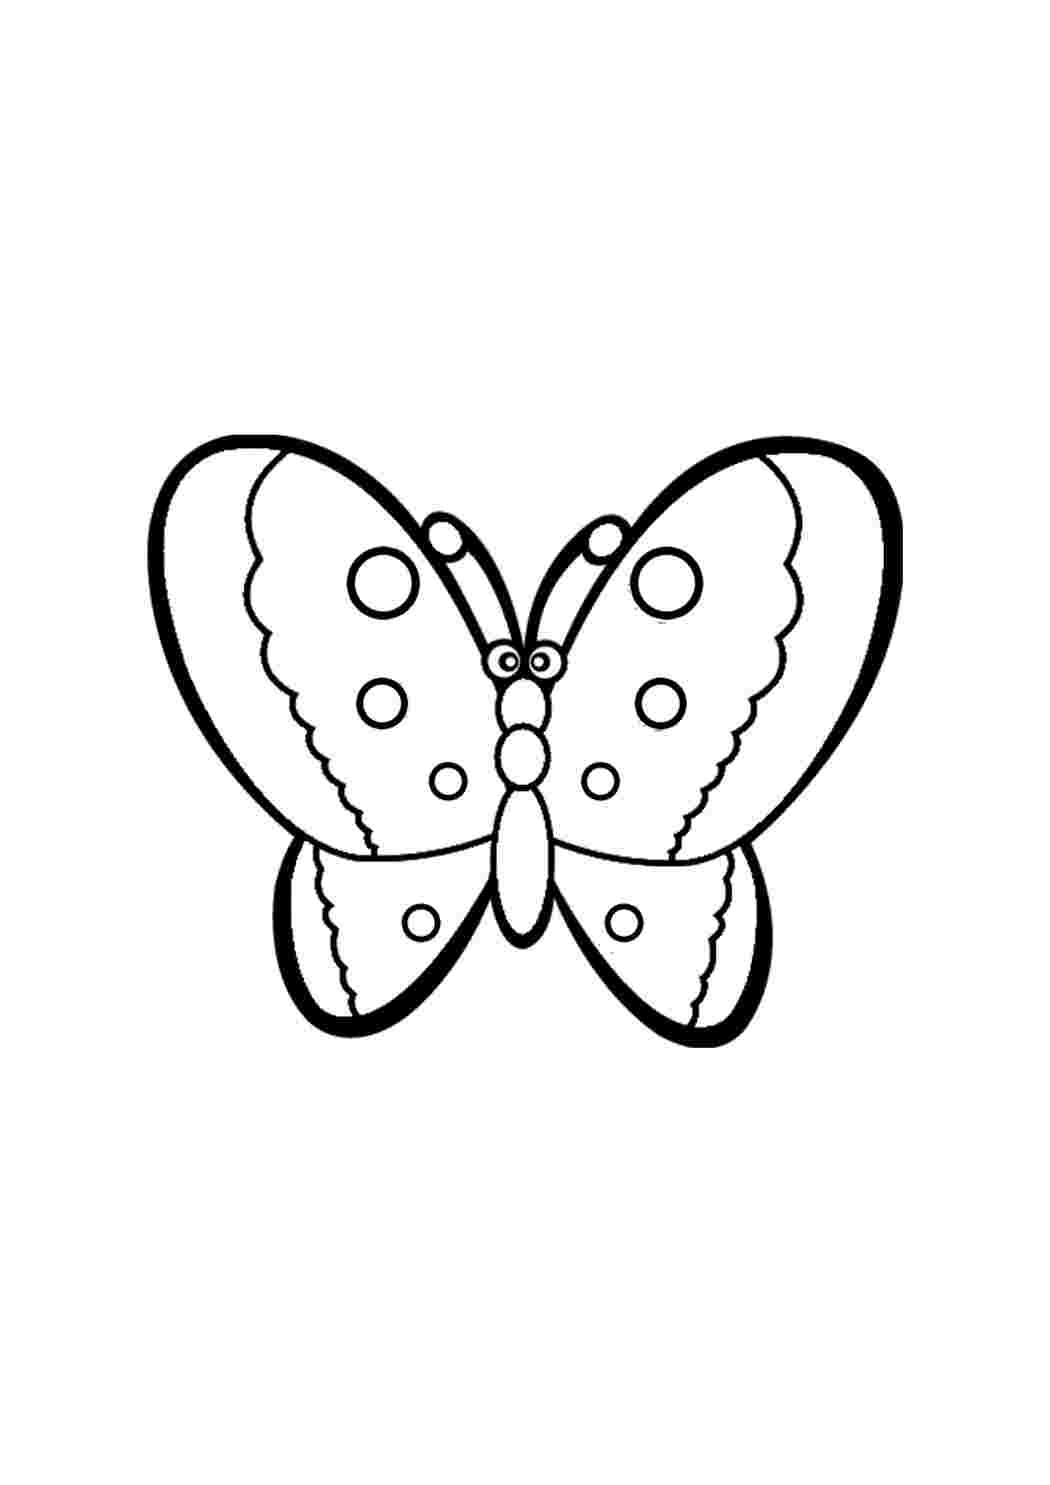 Раскраска Две бабочки